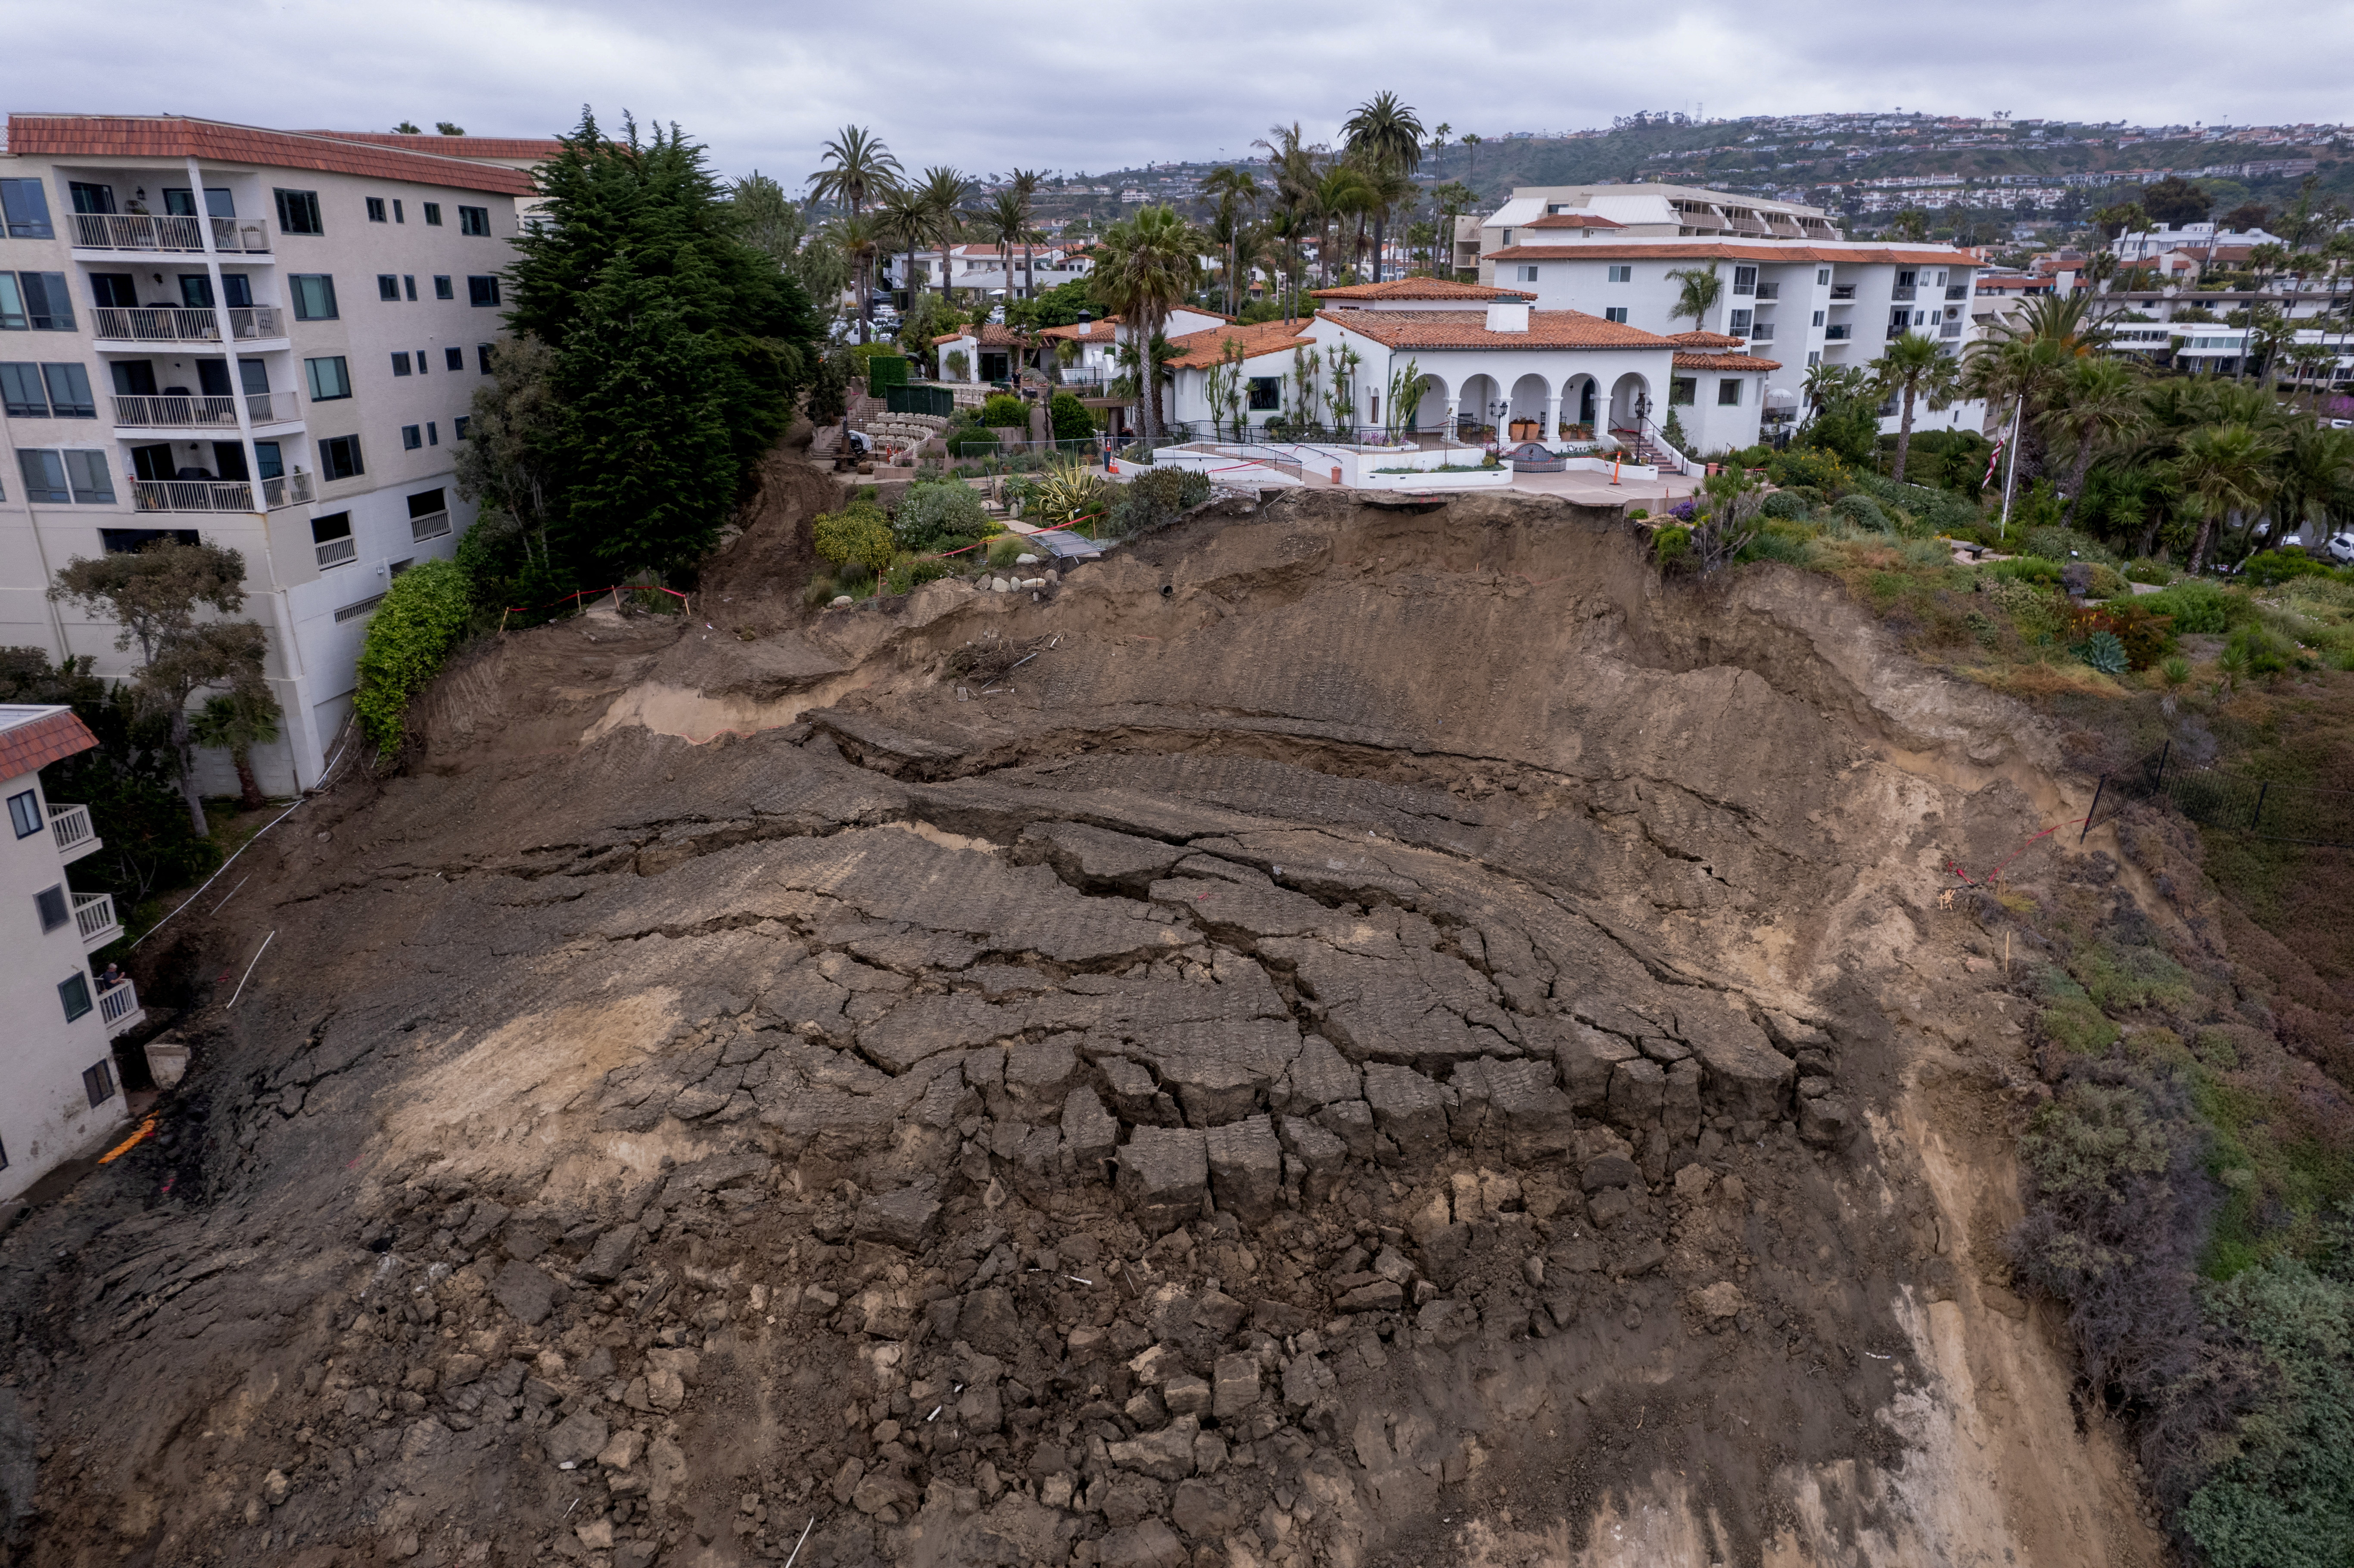 Landslide in San Clemente California suspends rail service